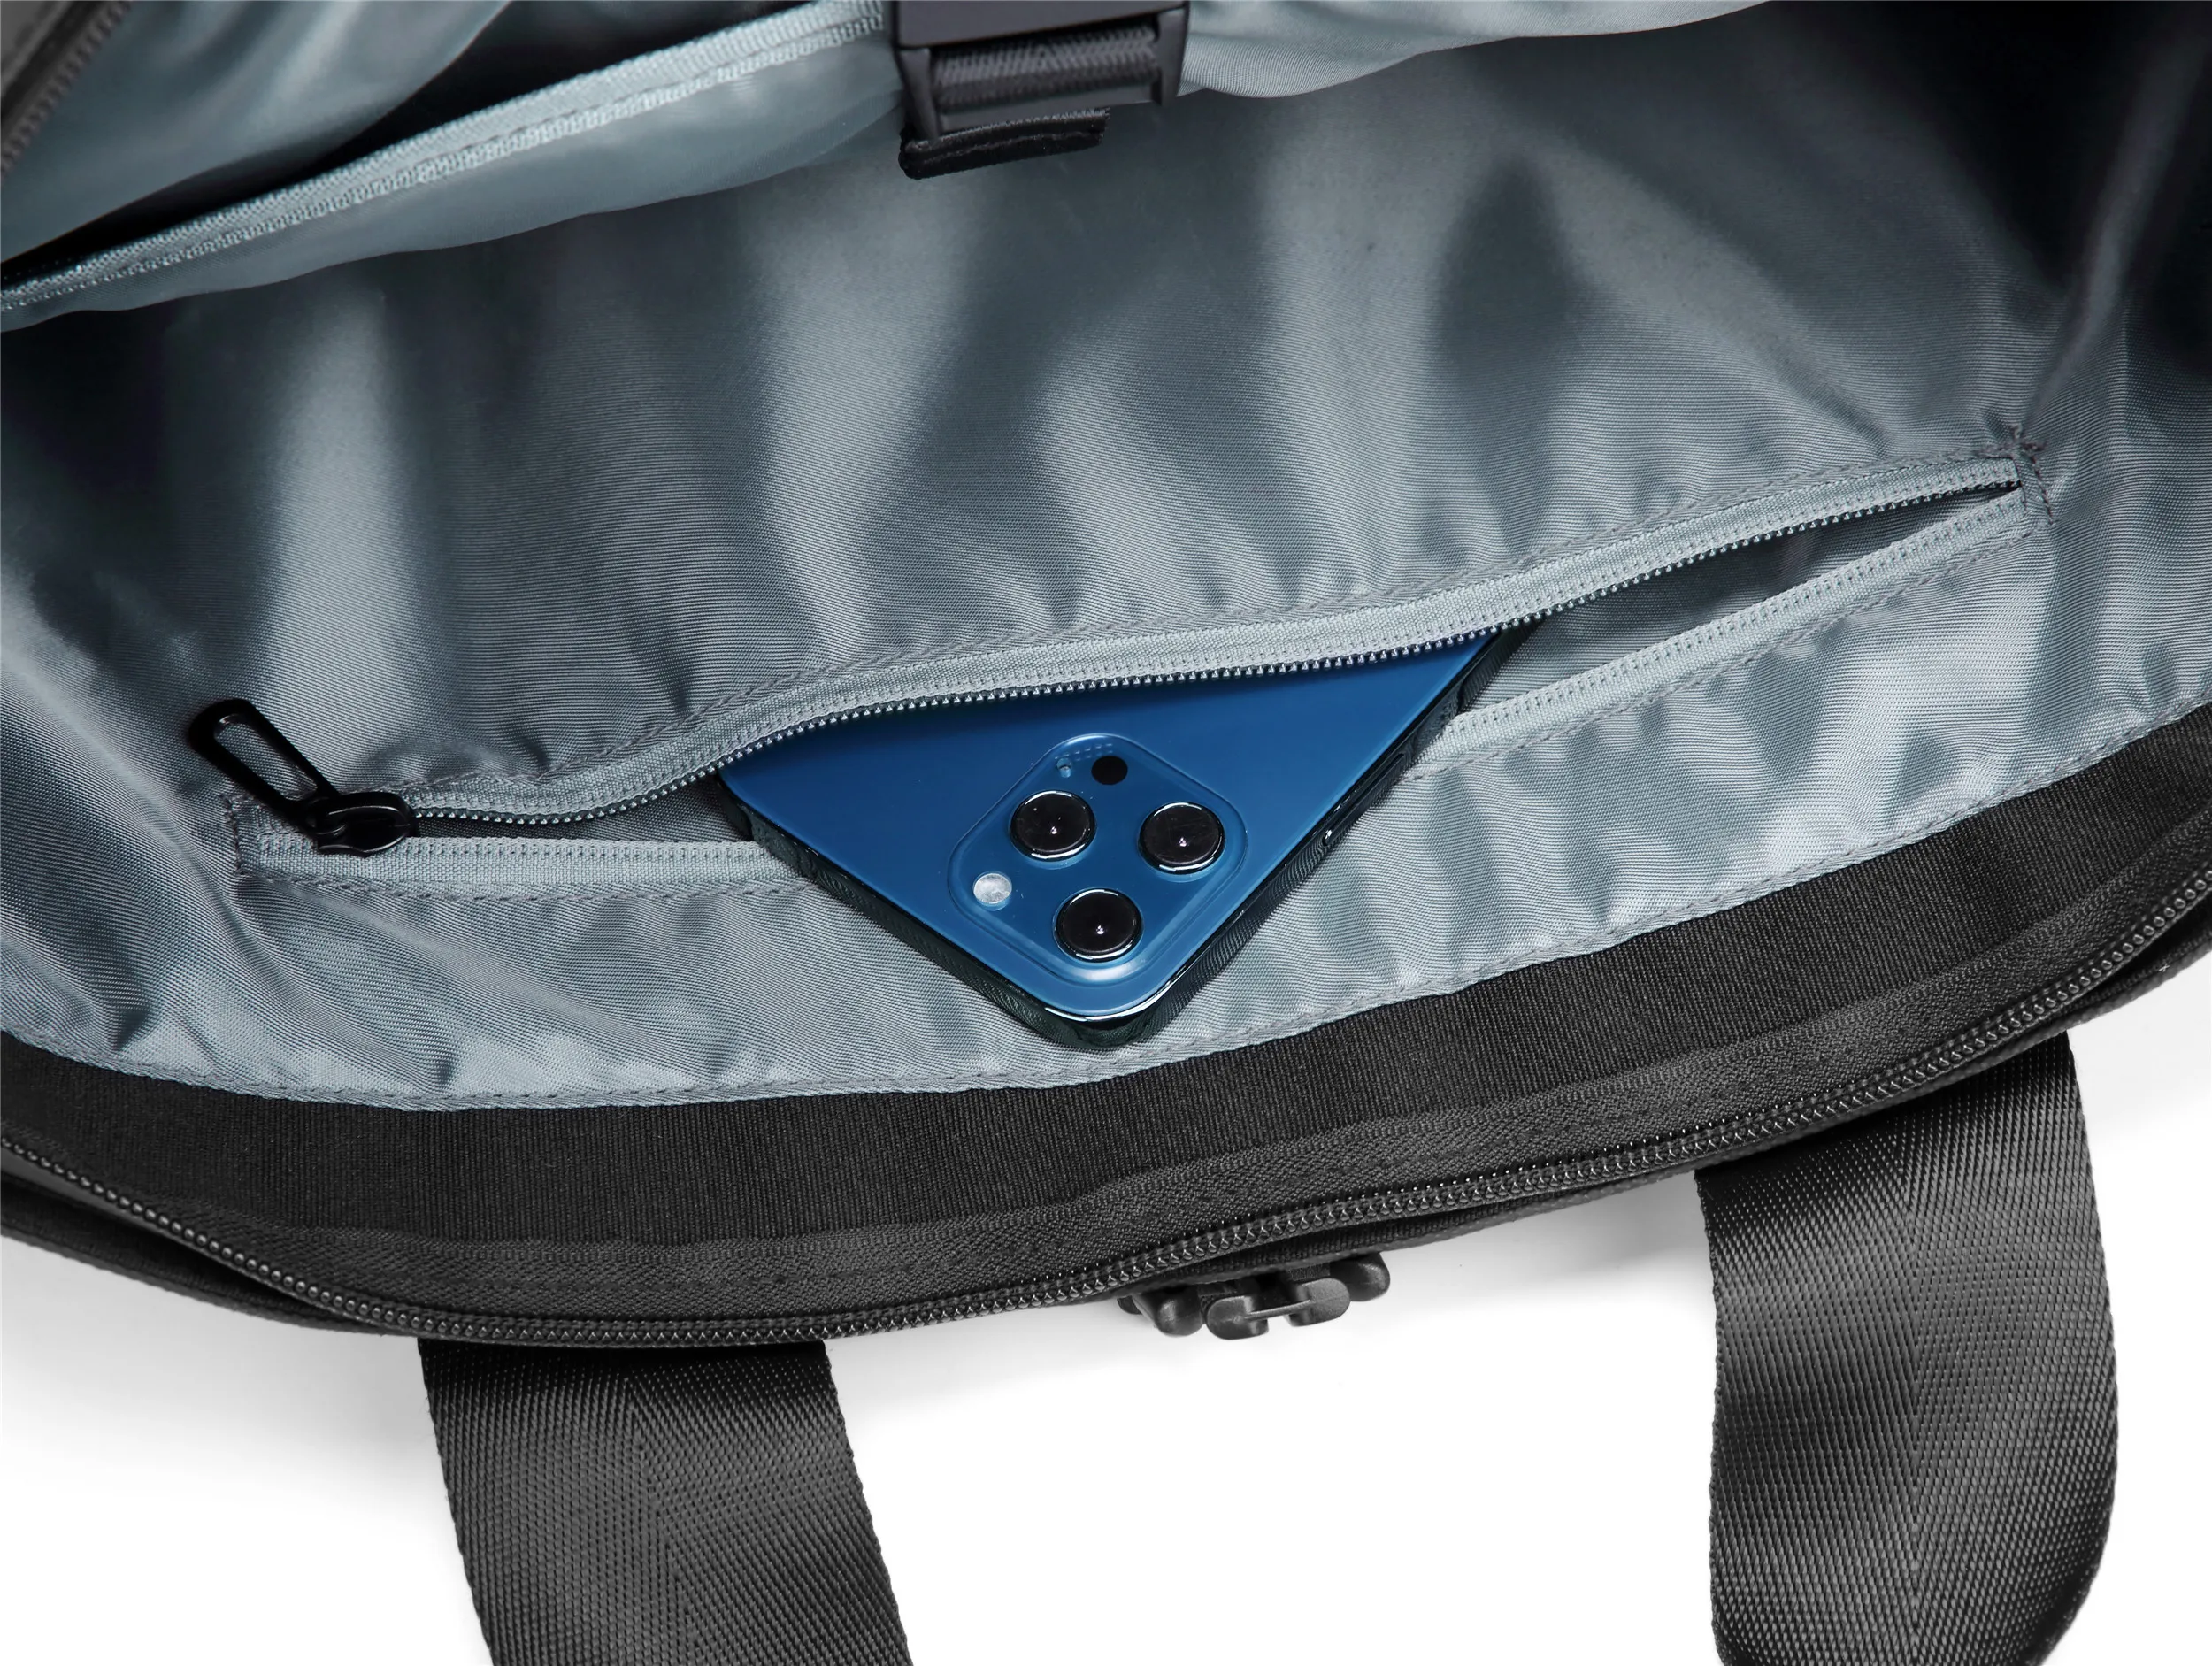 OEM Large Capacity Hand Bag lightweight waterproof shoulder smart new fashion large capacity Briefcase custom chest bag